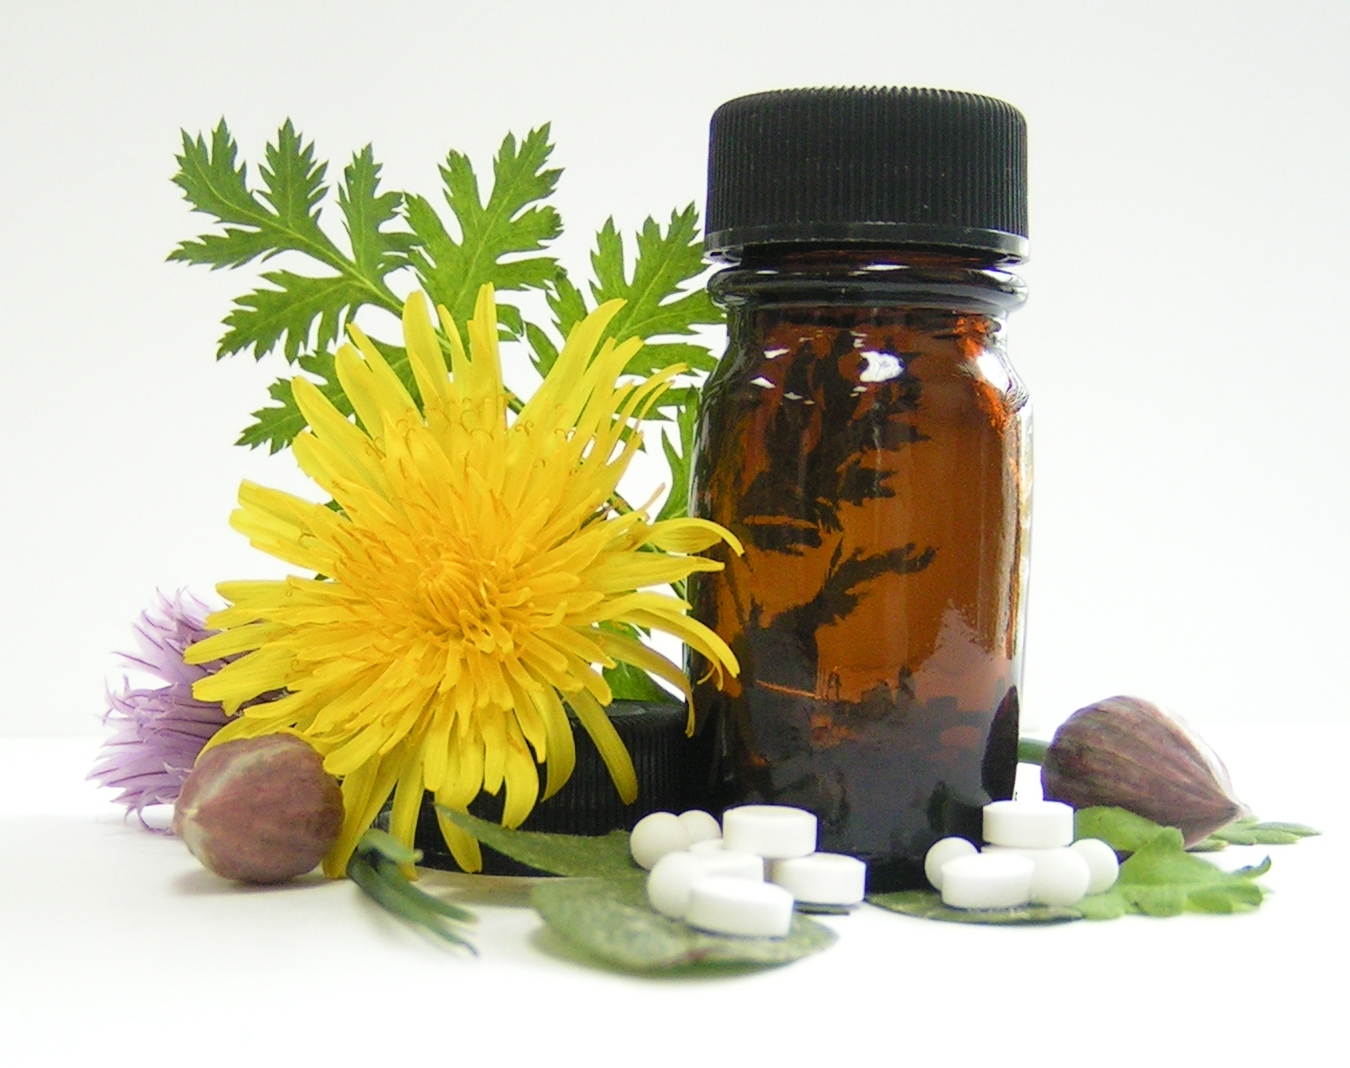 FDA wants to control natural remedies